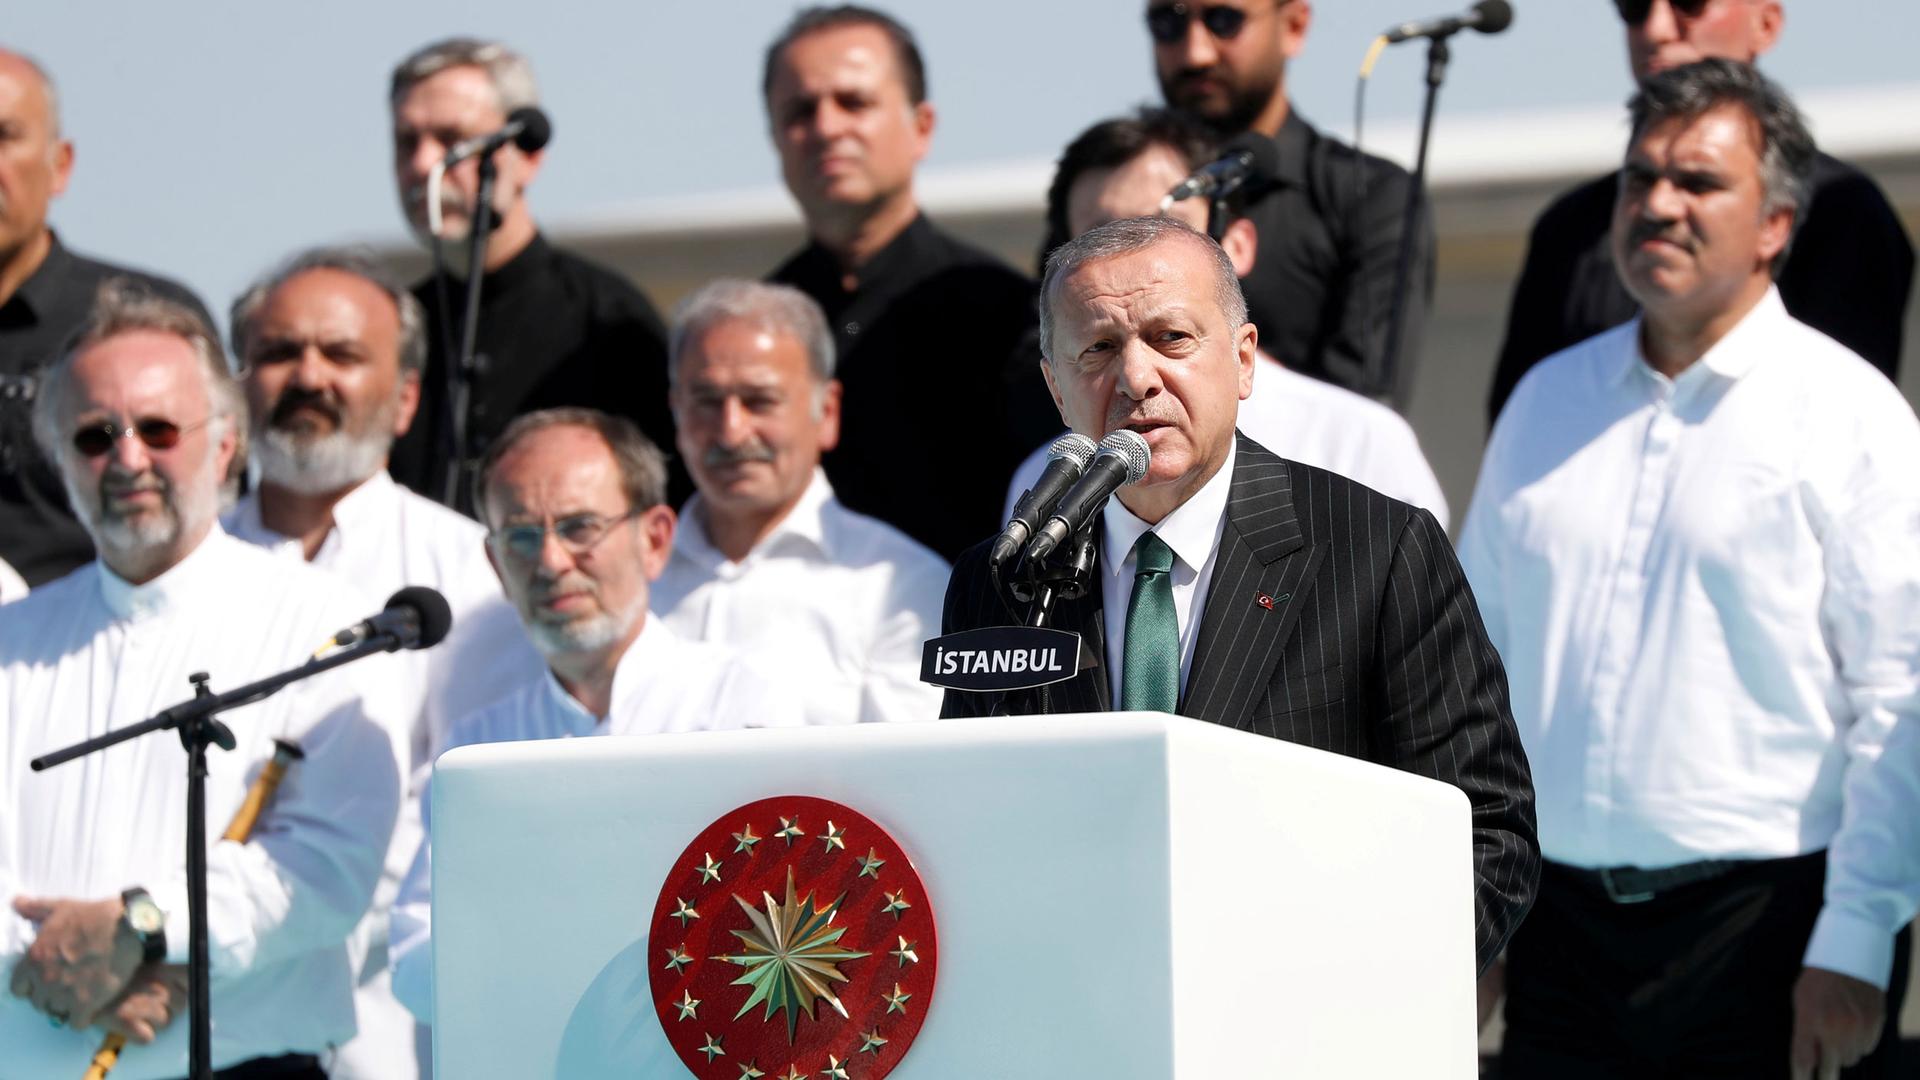 Turkish President Tayyip Erdoğan is shown making a speech behind a white podium with several stars on it.